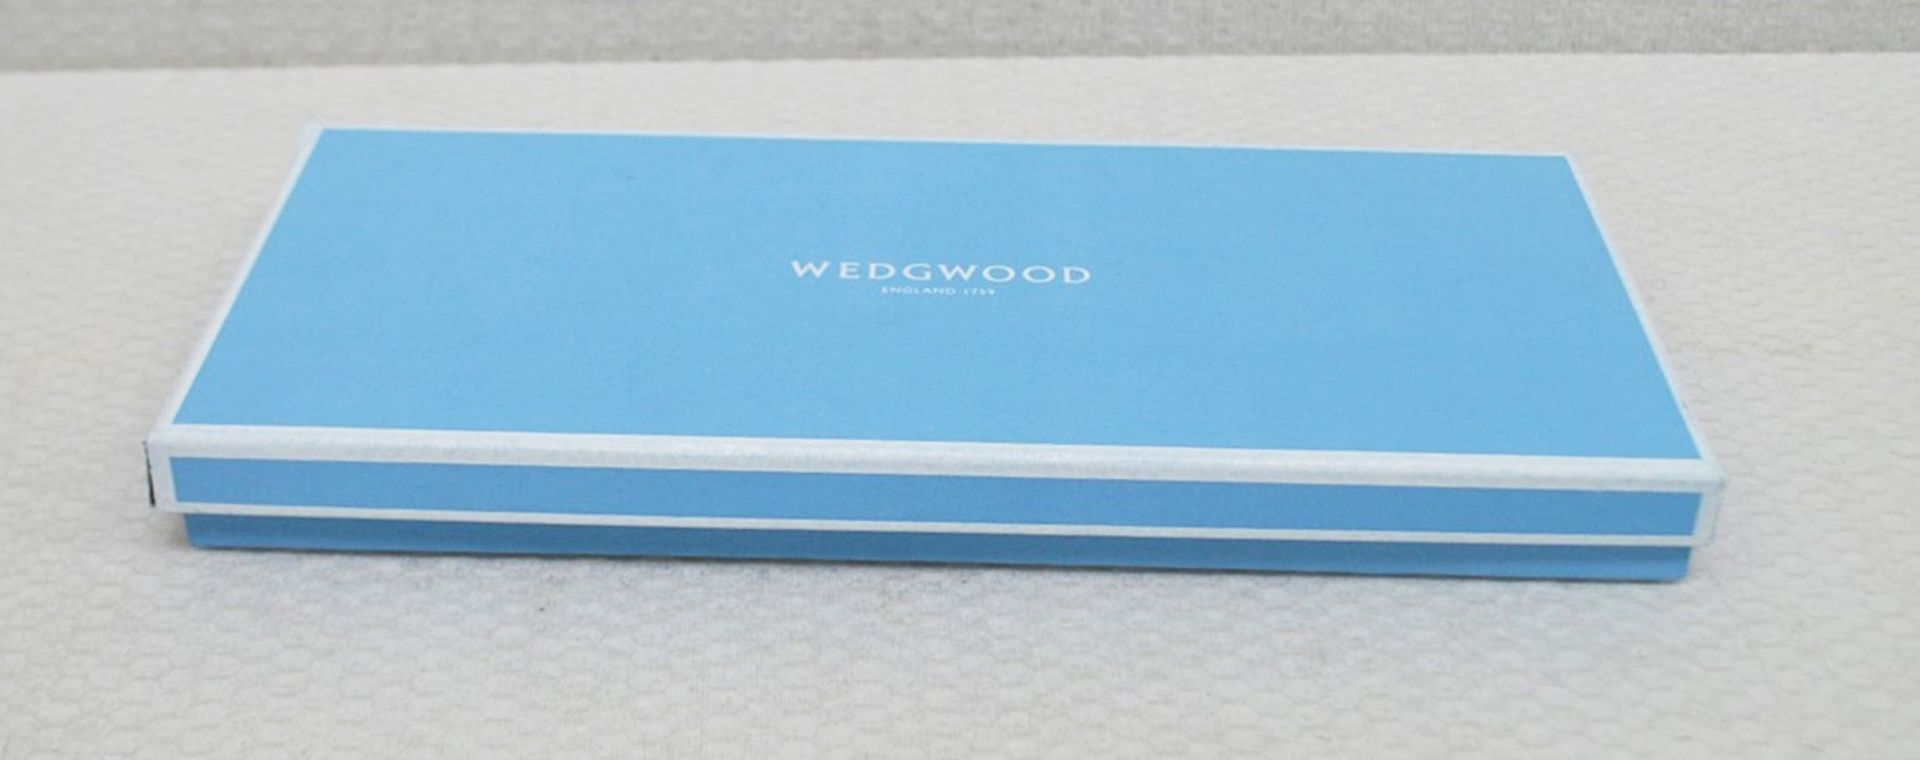 1 x WEDGWOOD 'Wonderlust' Blue Pagoda Sandwich Tray In It's Original Box - Original RRP £85.00 - Image 3 of 8